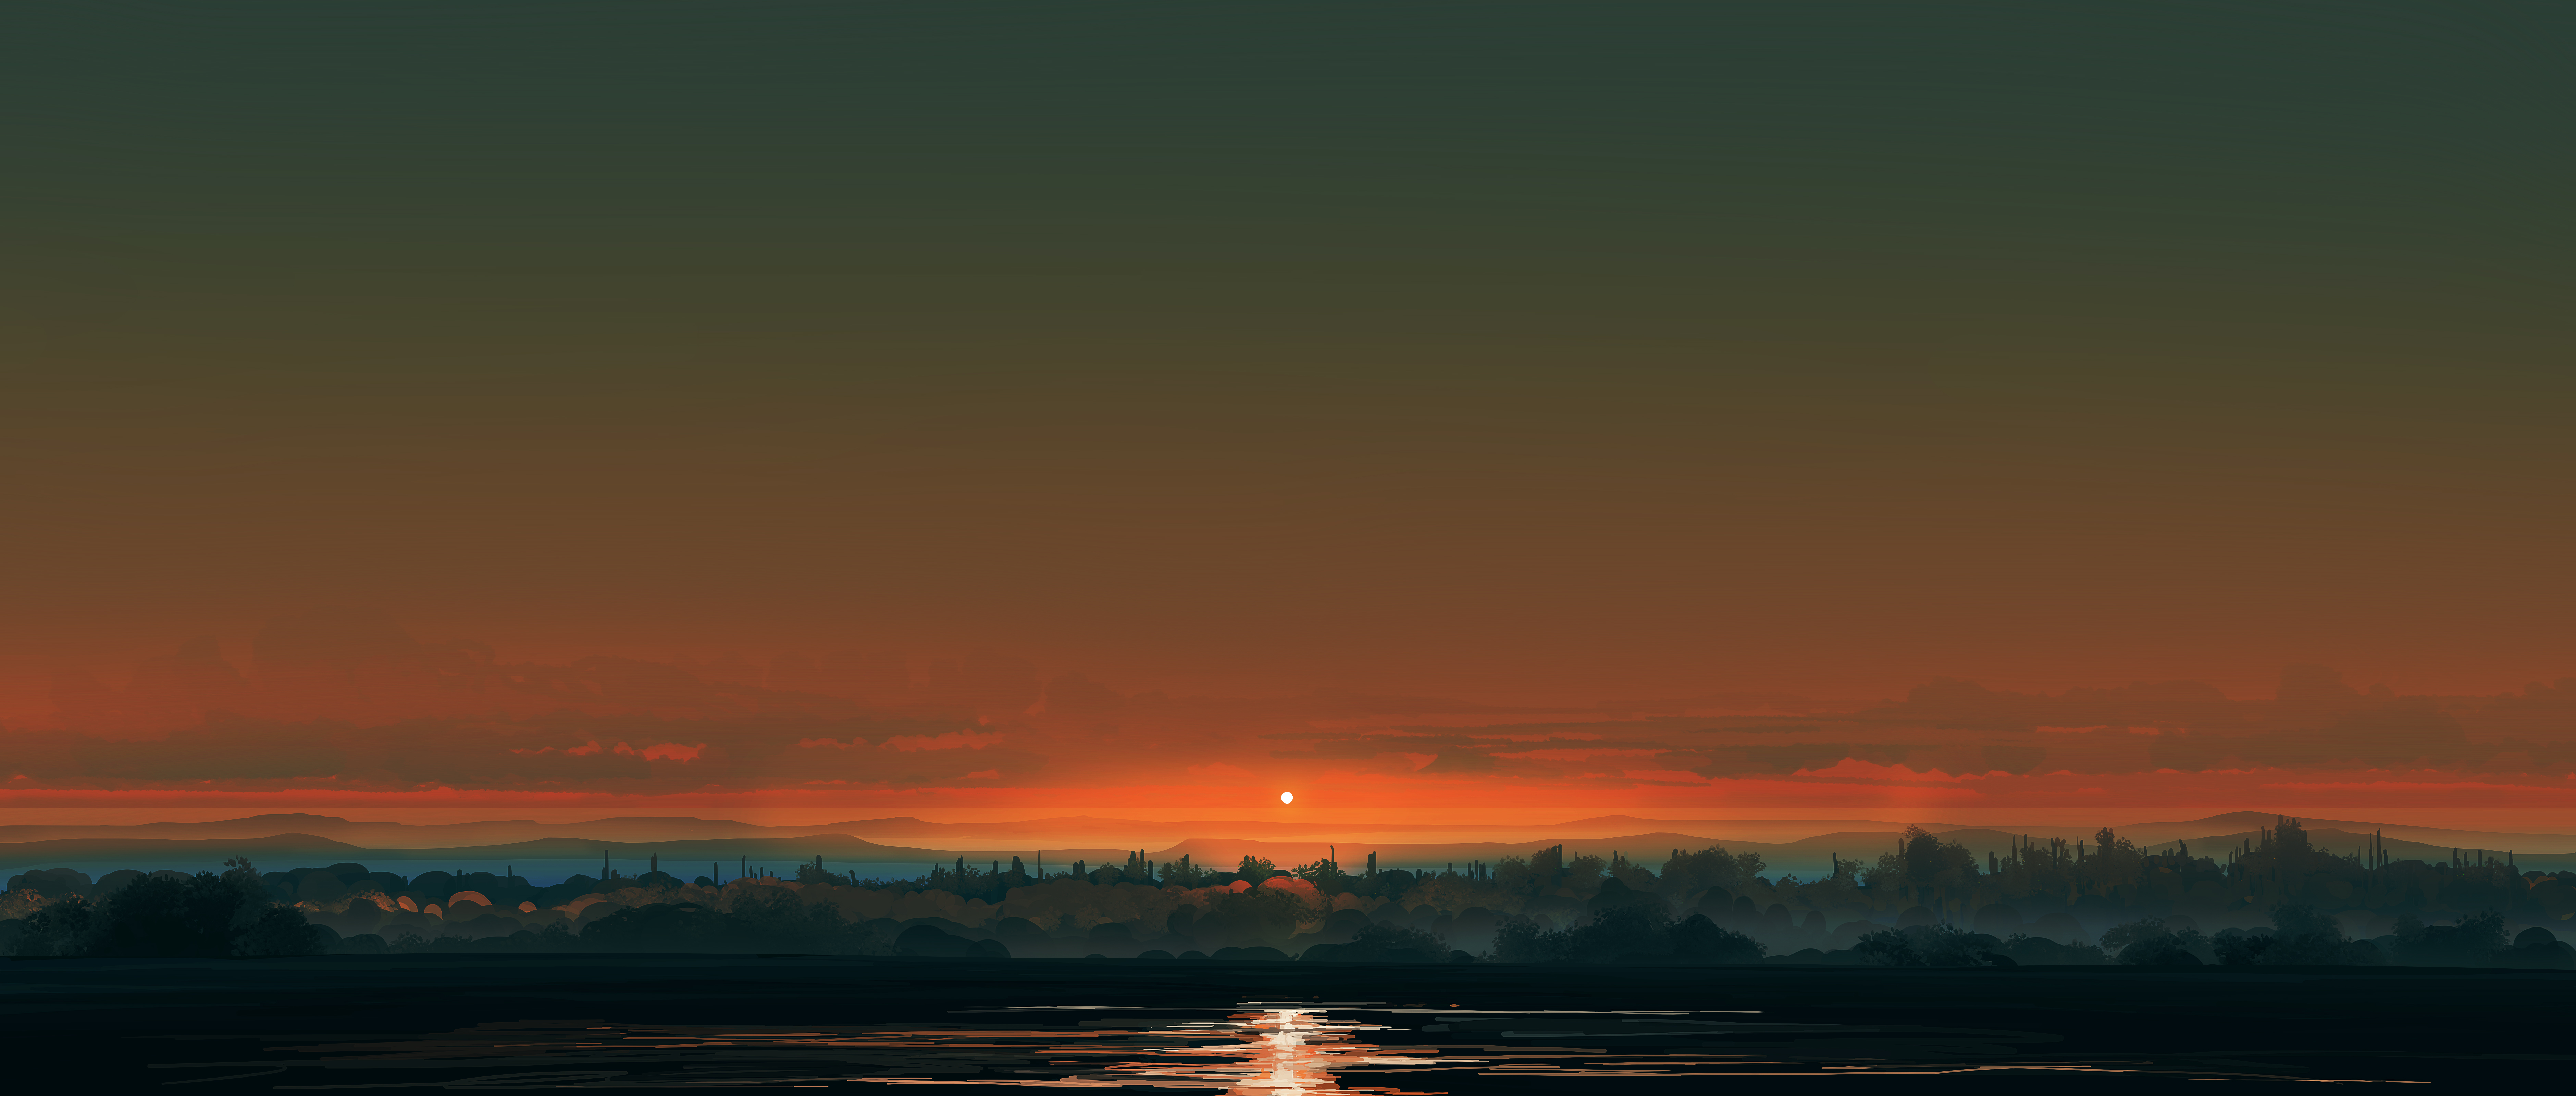 General 7520x3200 artwork illustration landscape nature sunset lake minimalism simple background